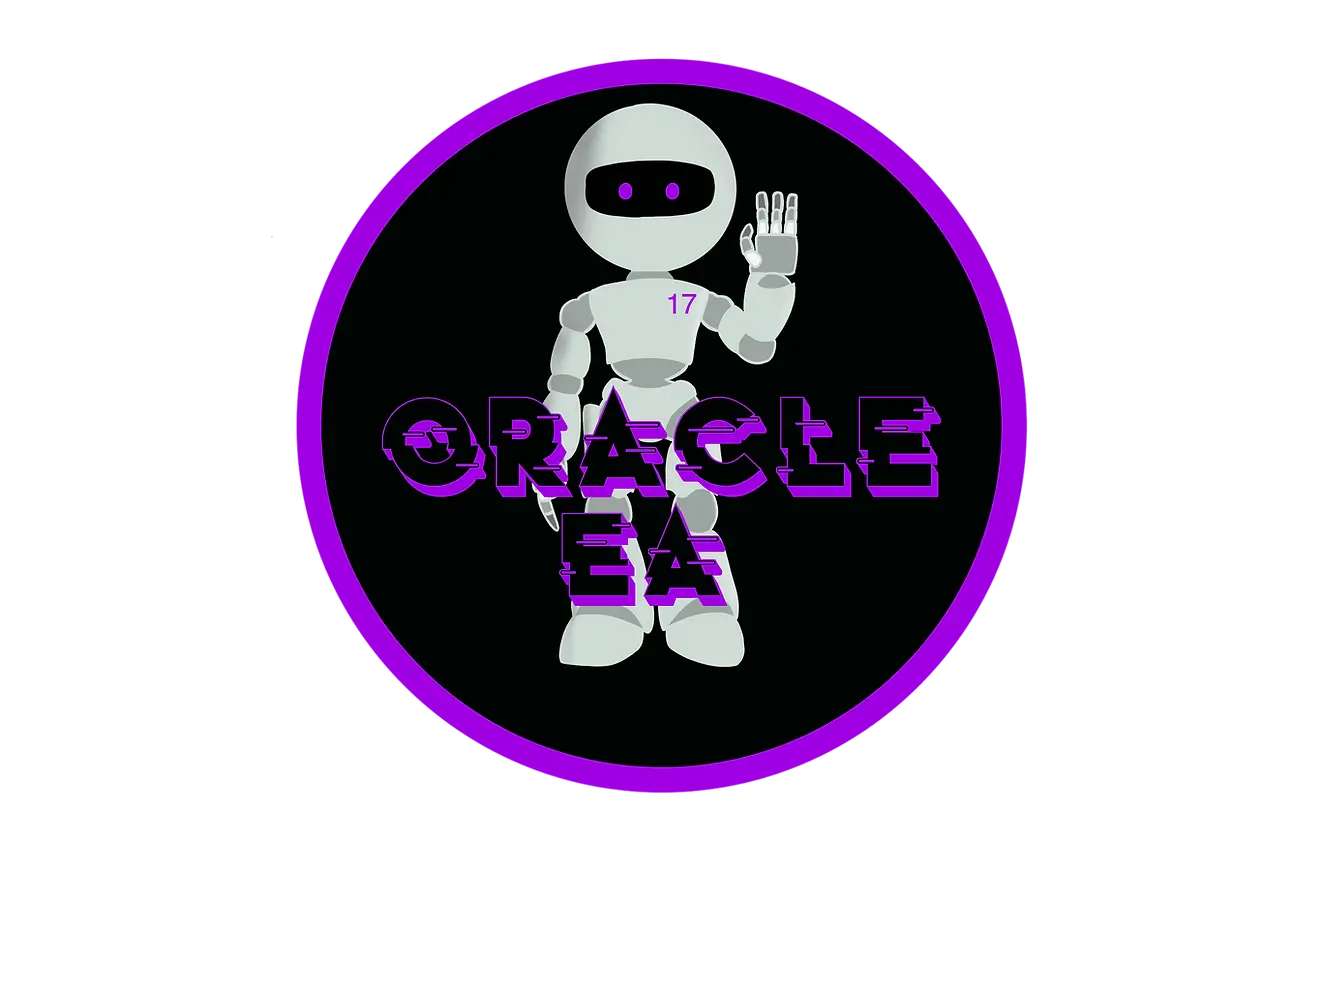 Oracle EA 2.0 1